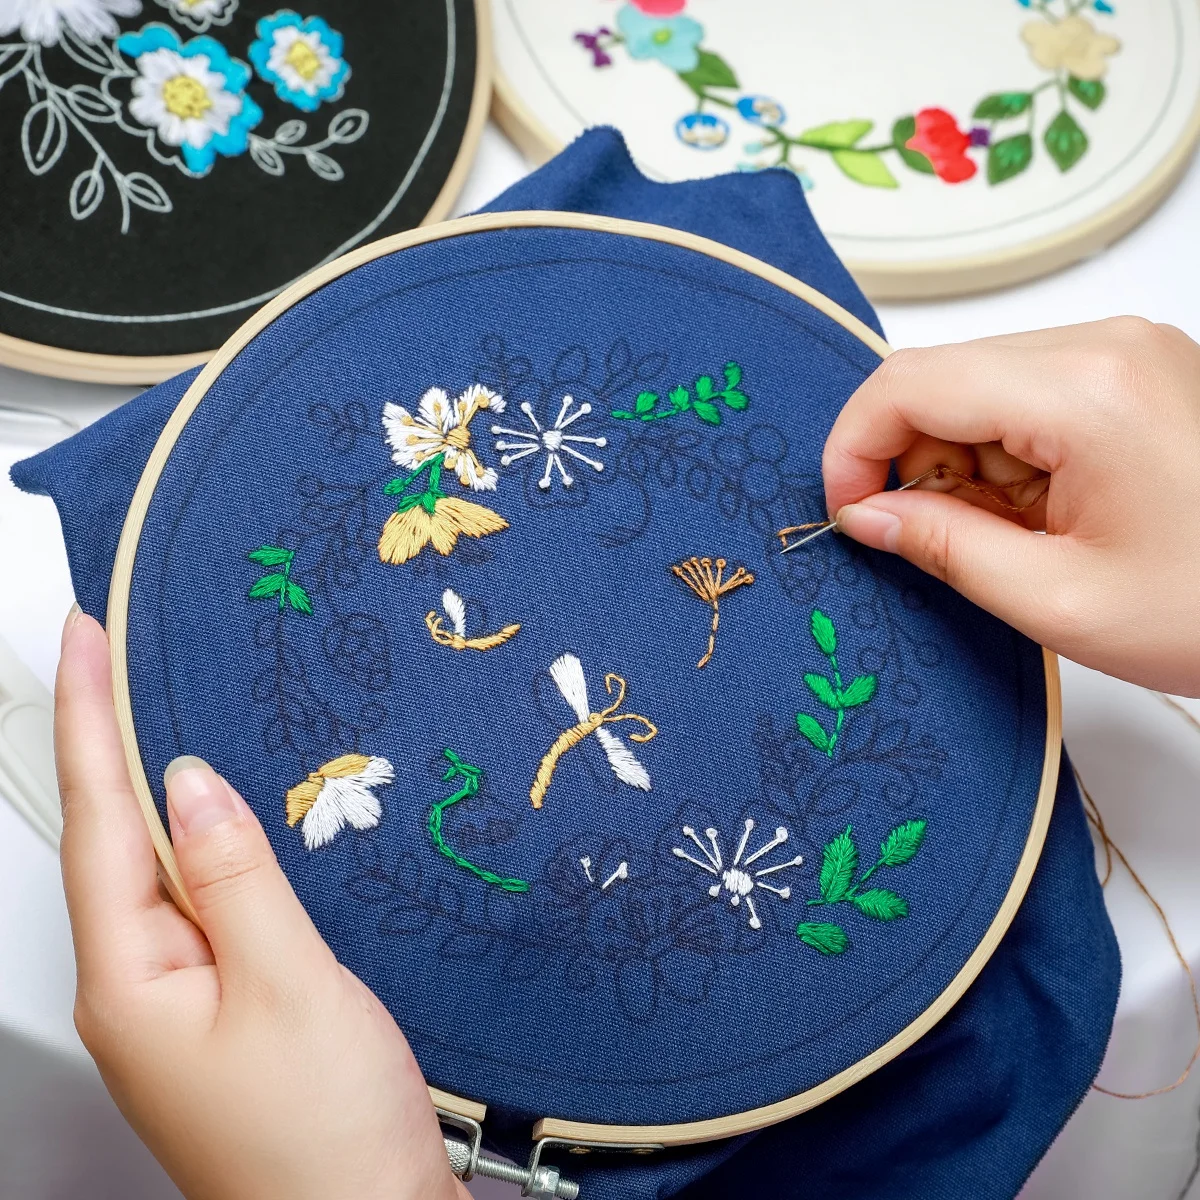 
hot sale 3pcs cross-stitch set embroidery starter kit with pattern 